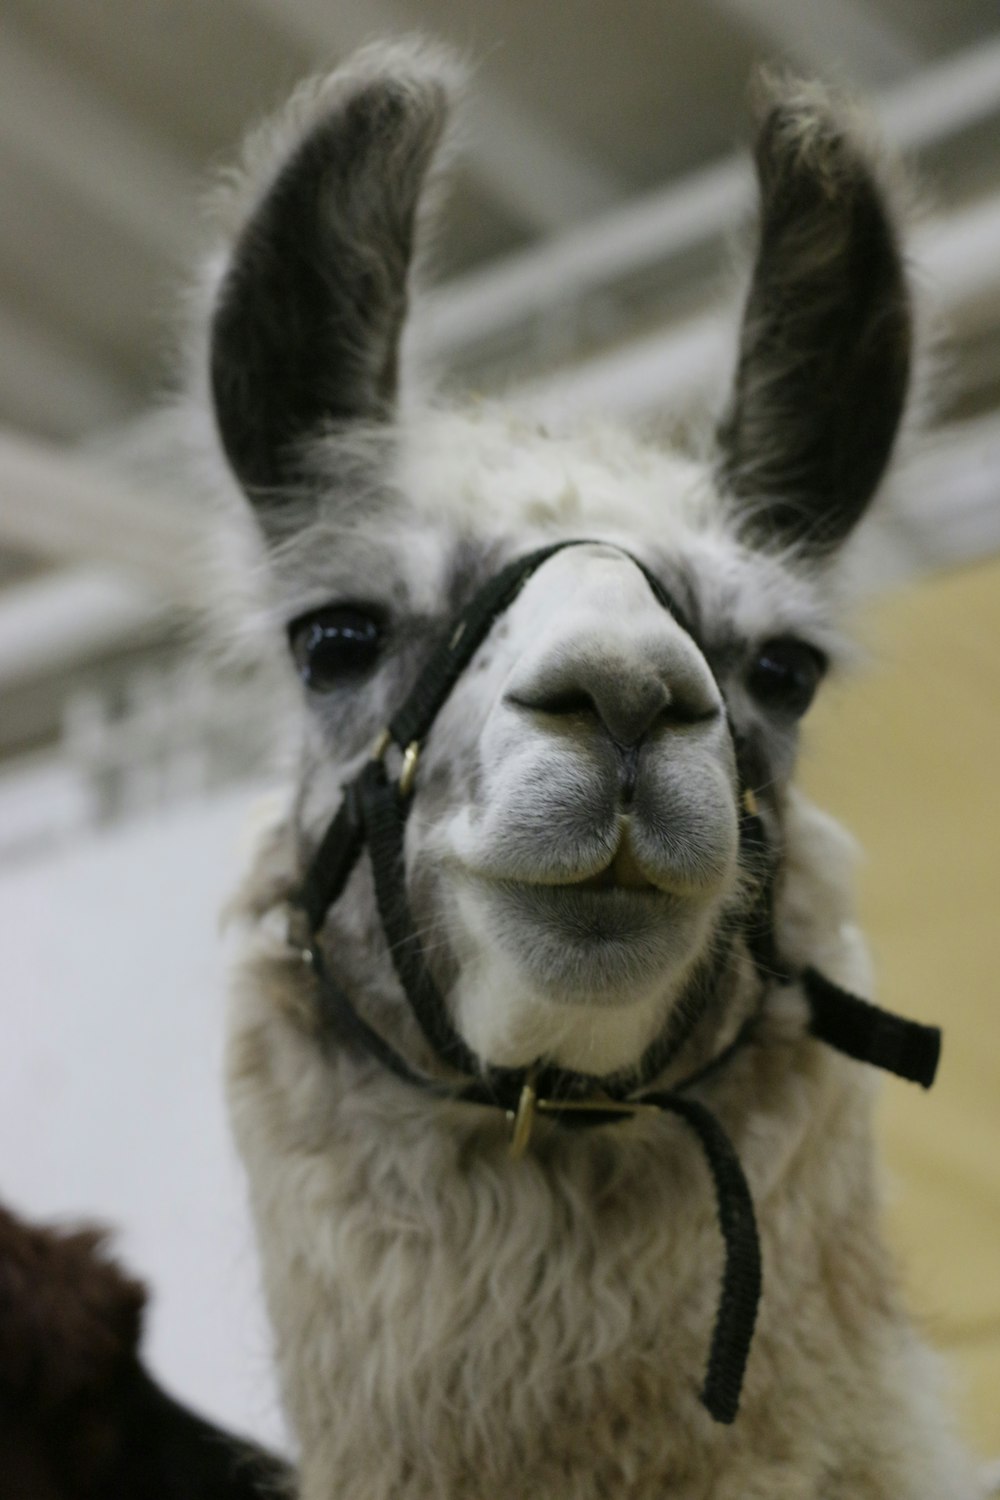 grayscale photography of llama